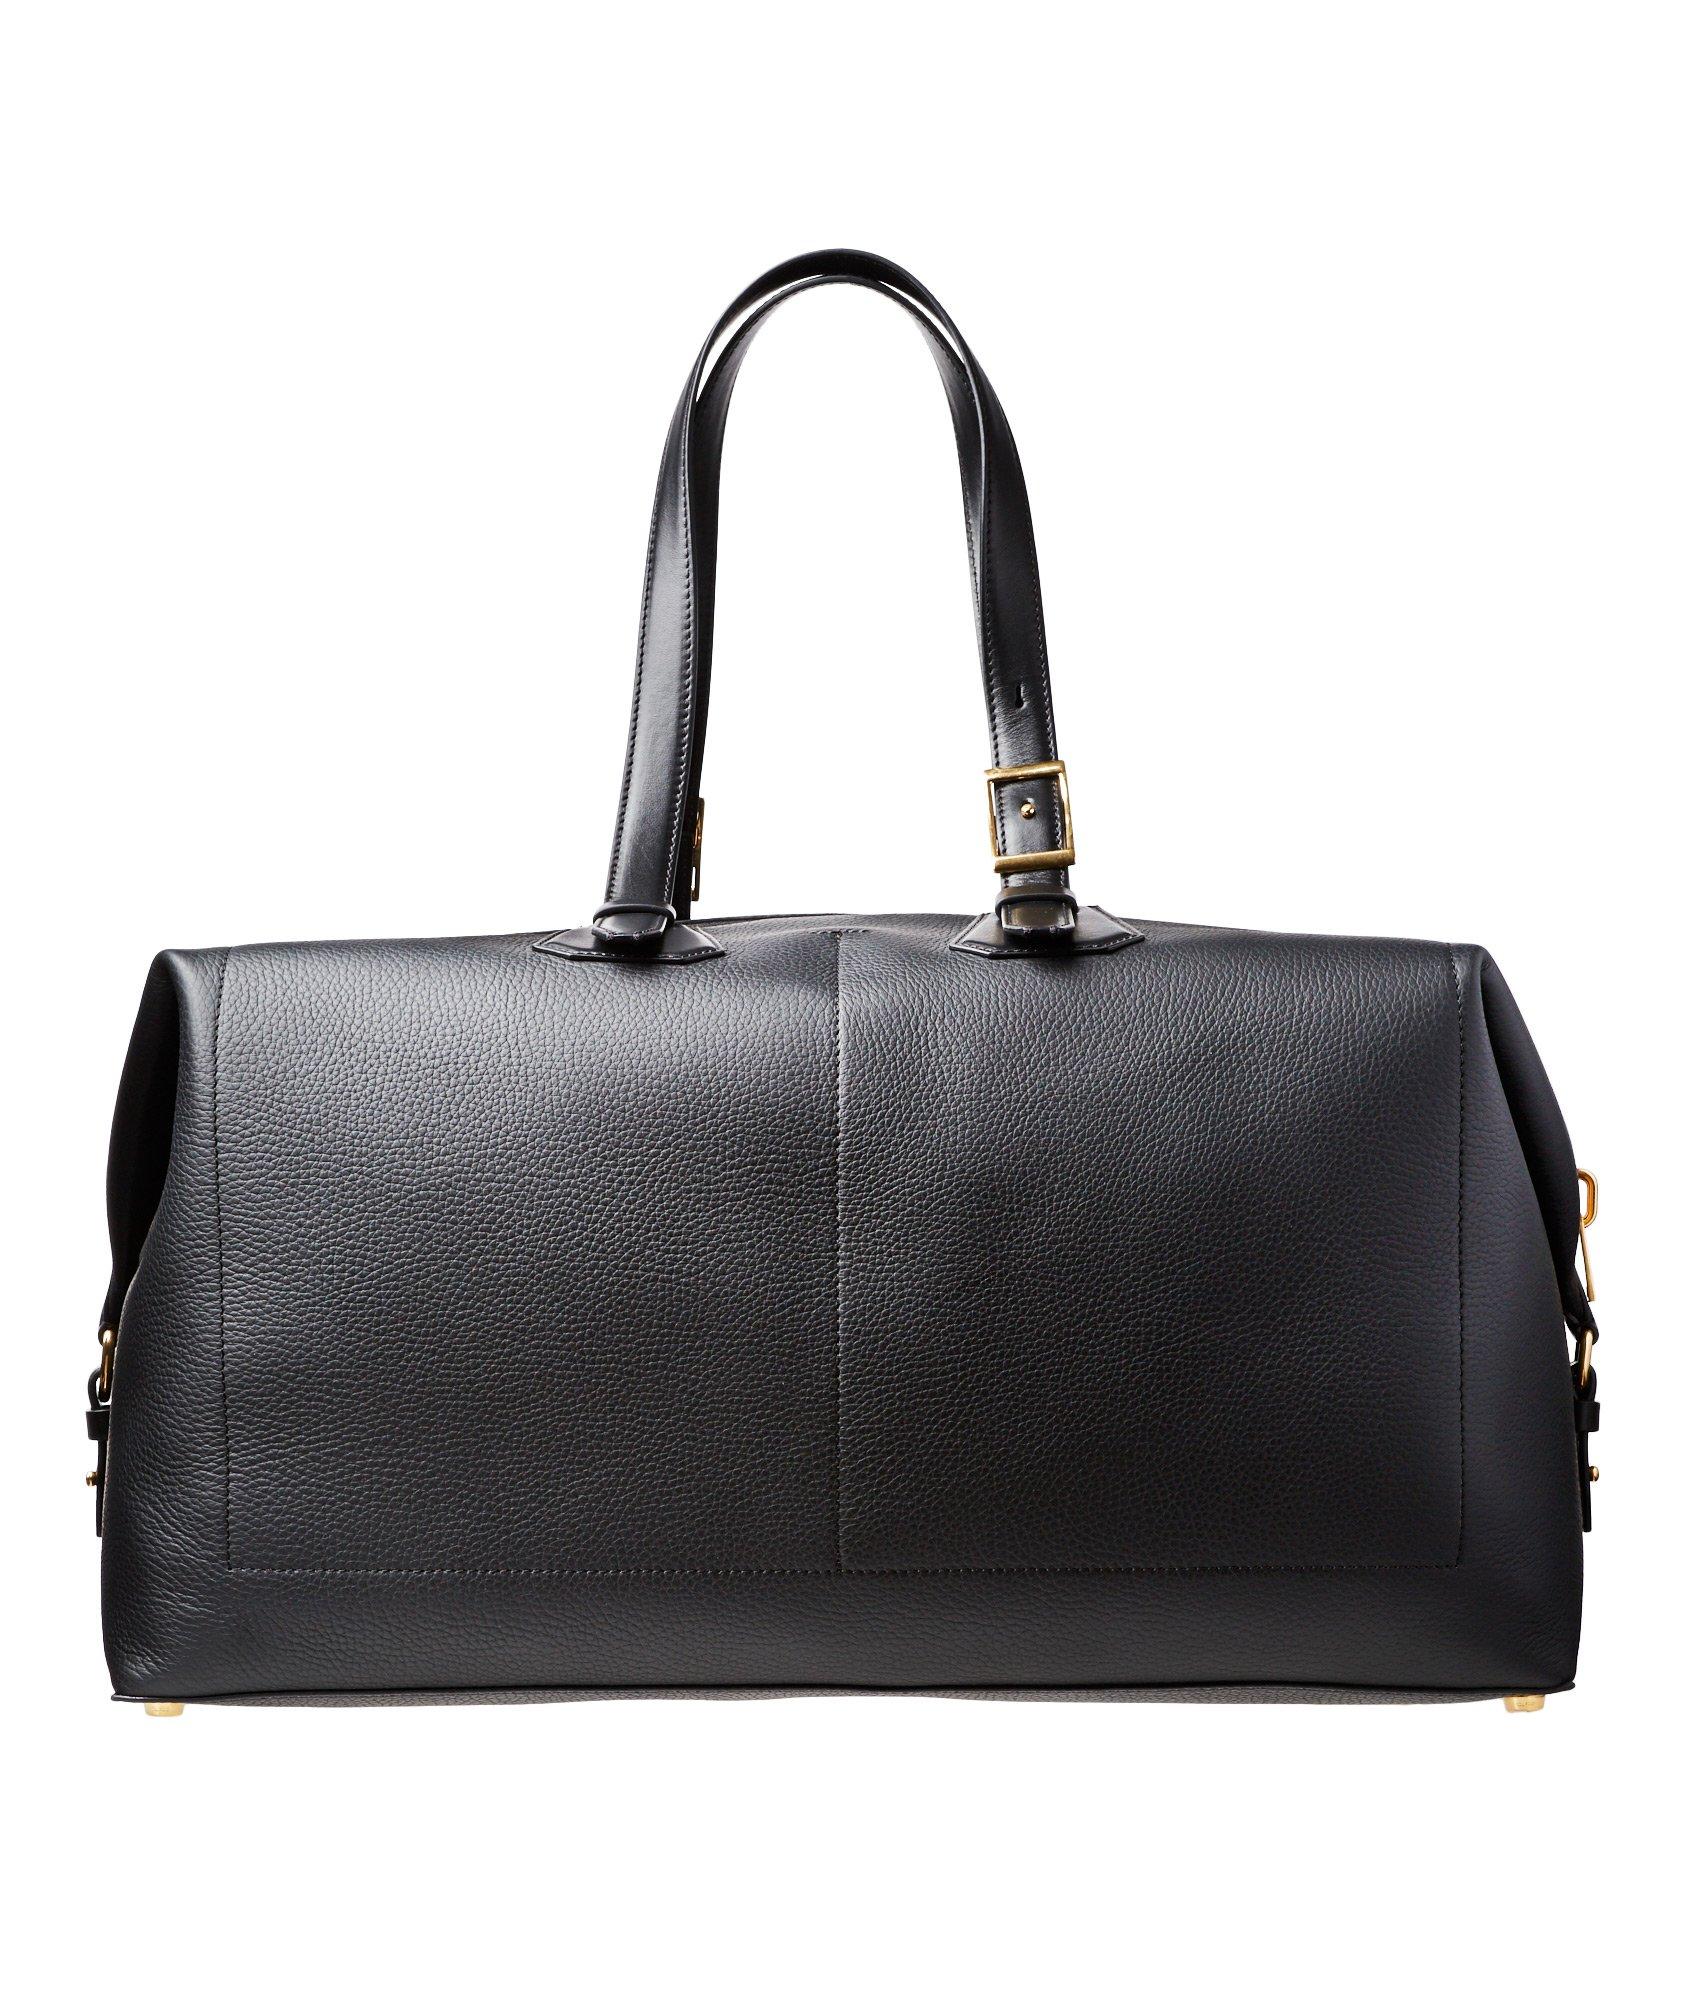 Leather Duffle Bag image 0